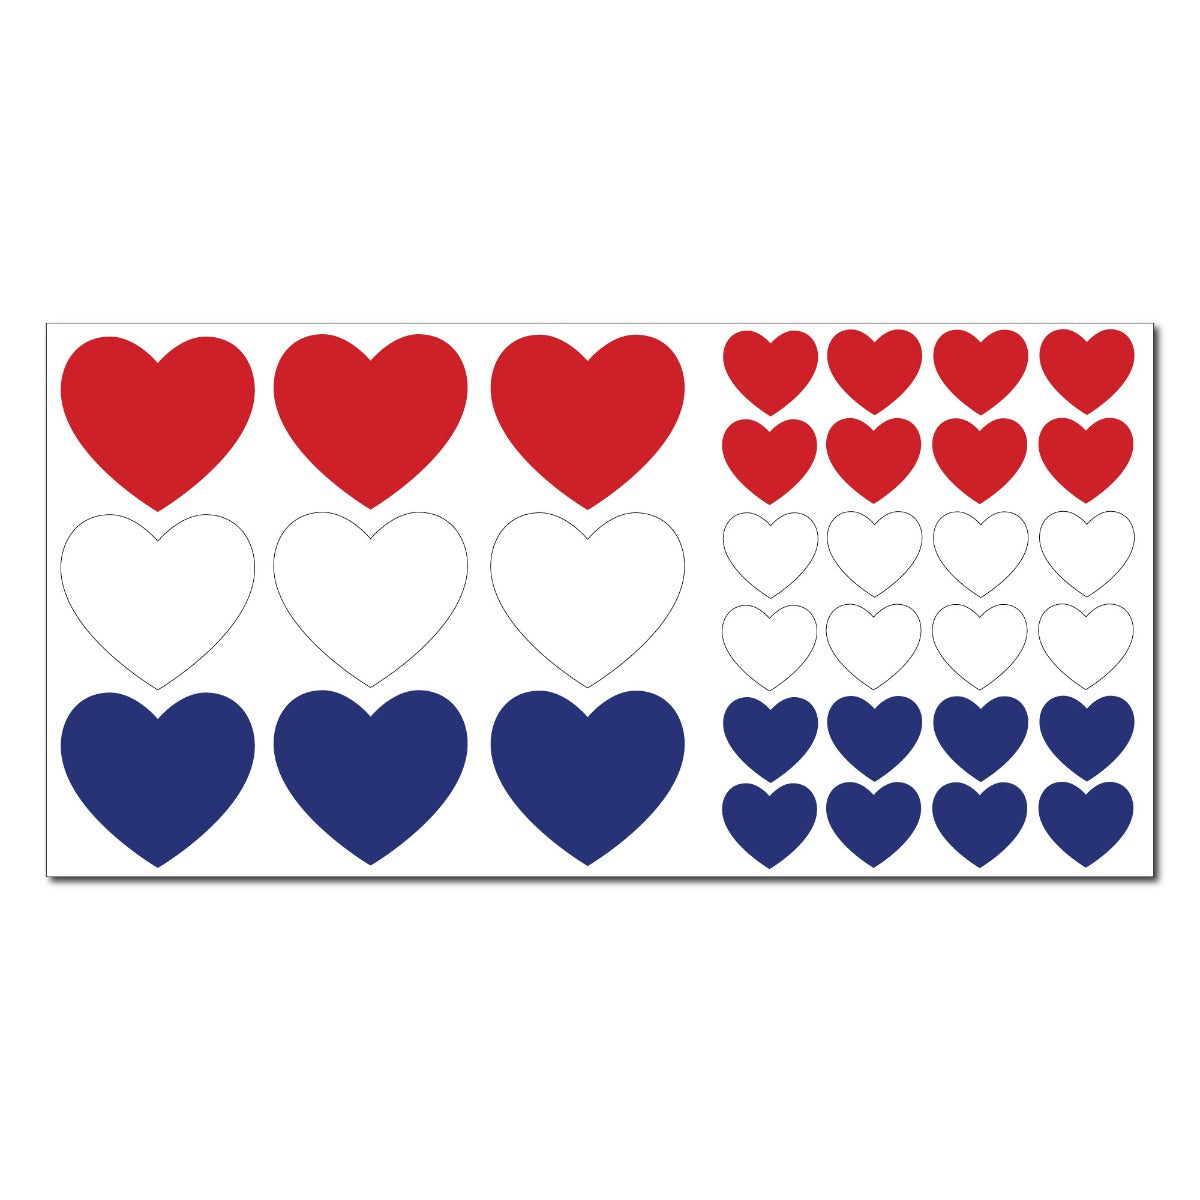 King Charles Coronation Union Jack Hearts Wall Sticker Set